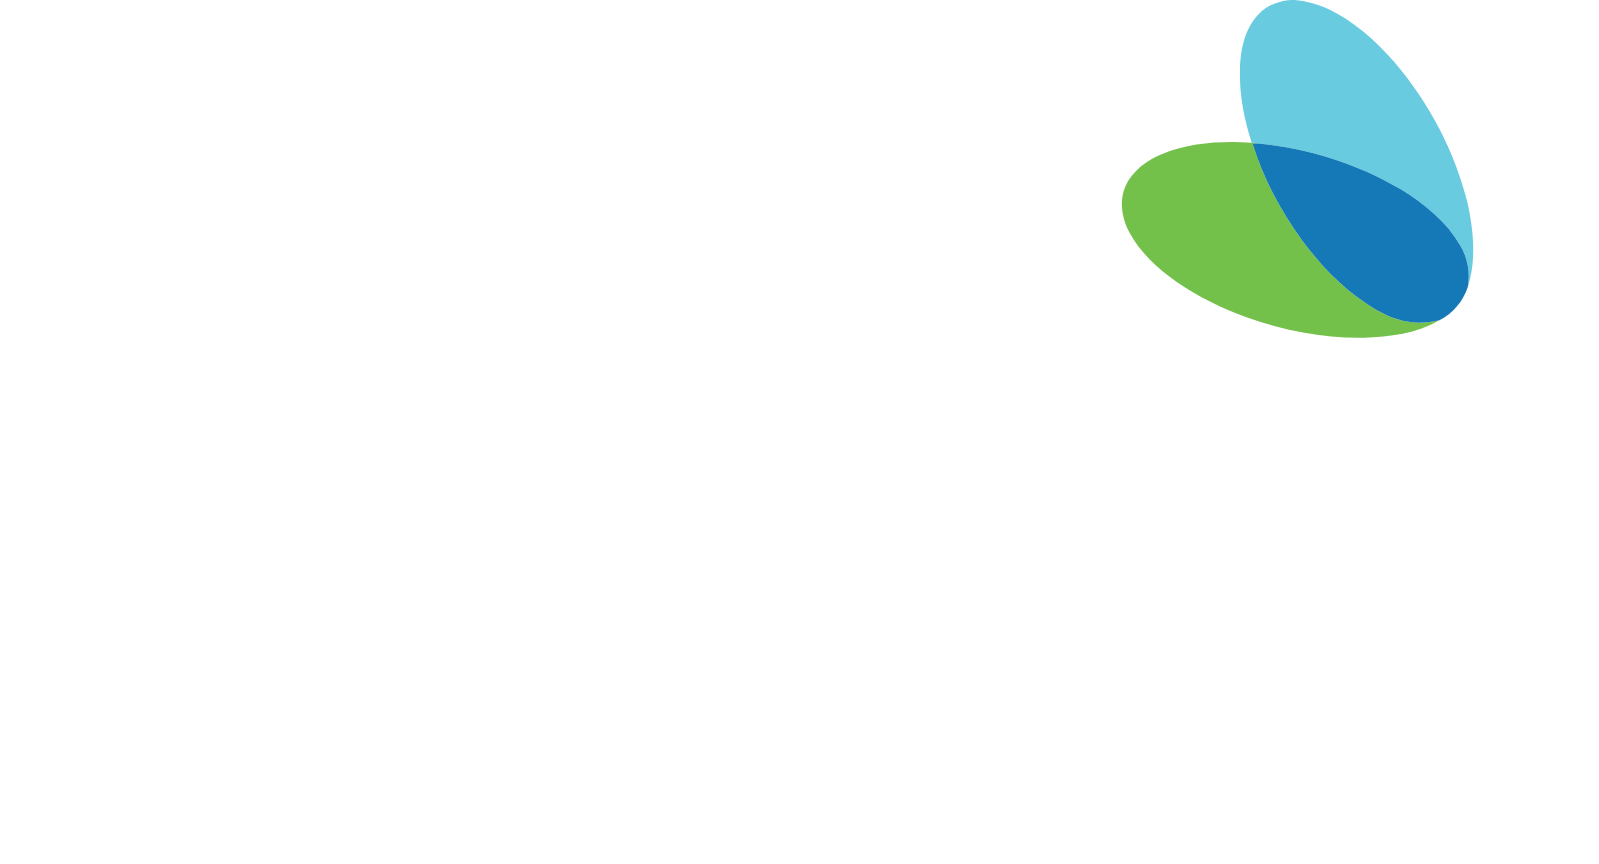 Aveanna Healthcare logo large for dark backgrounds (transparent PNG)